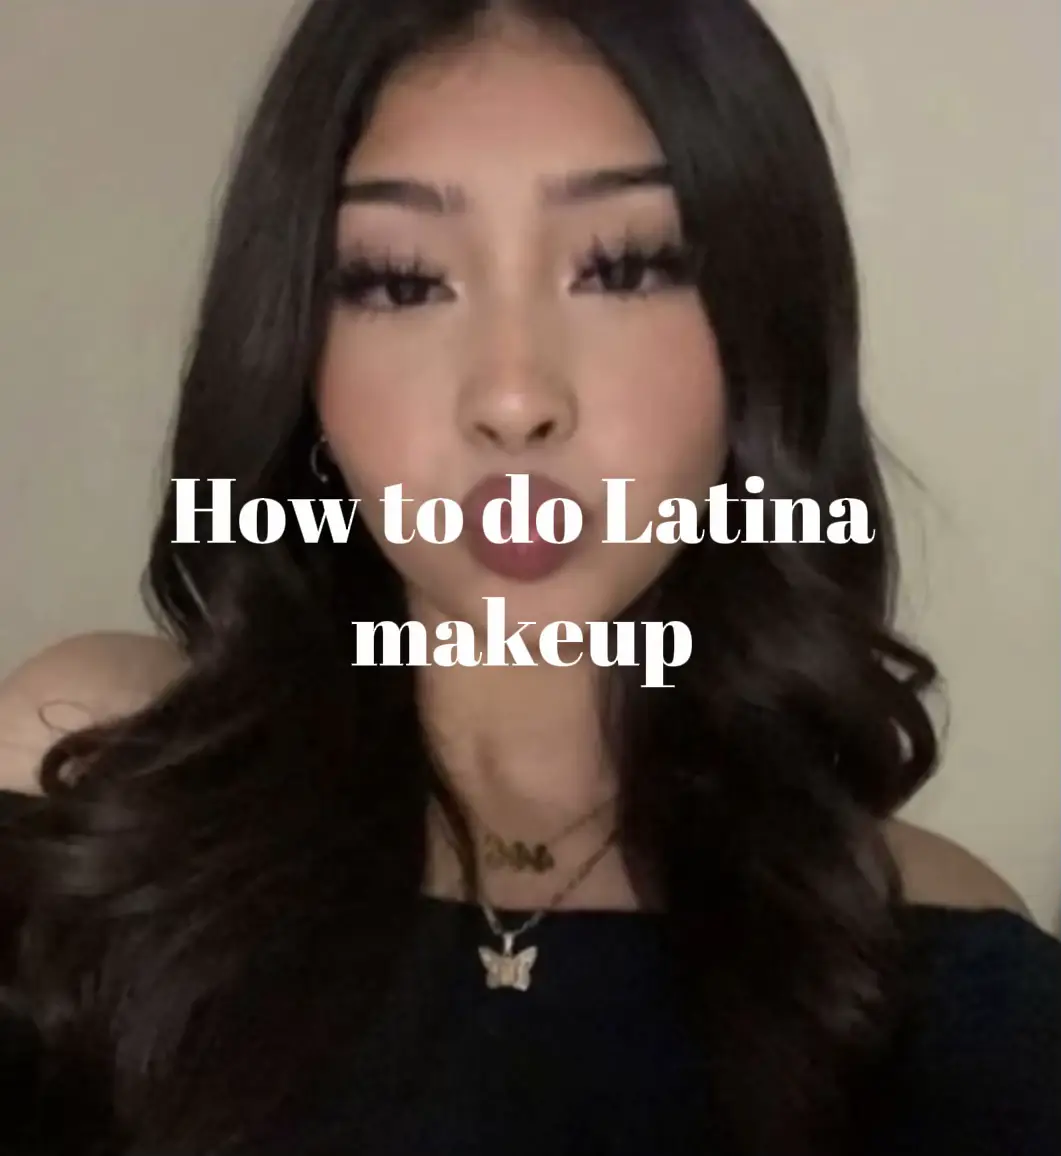 darryll beaman recommends latina milky boobs pic